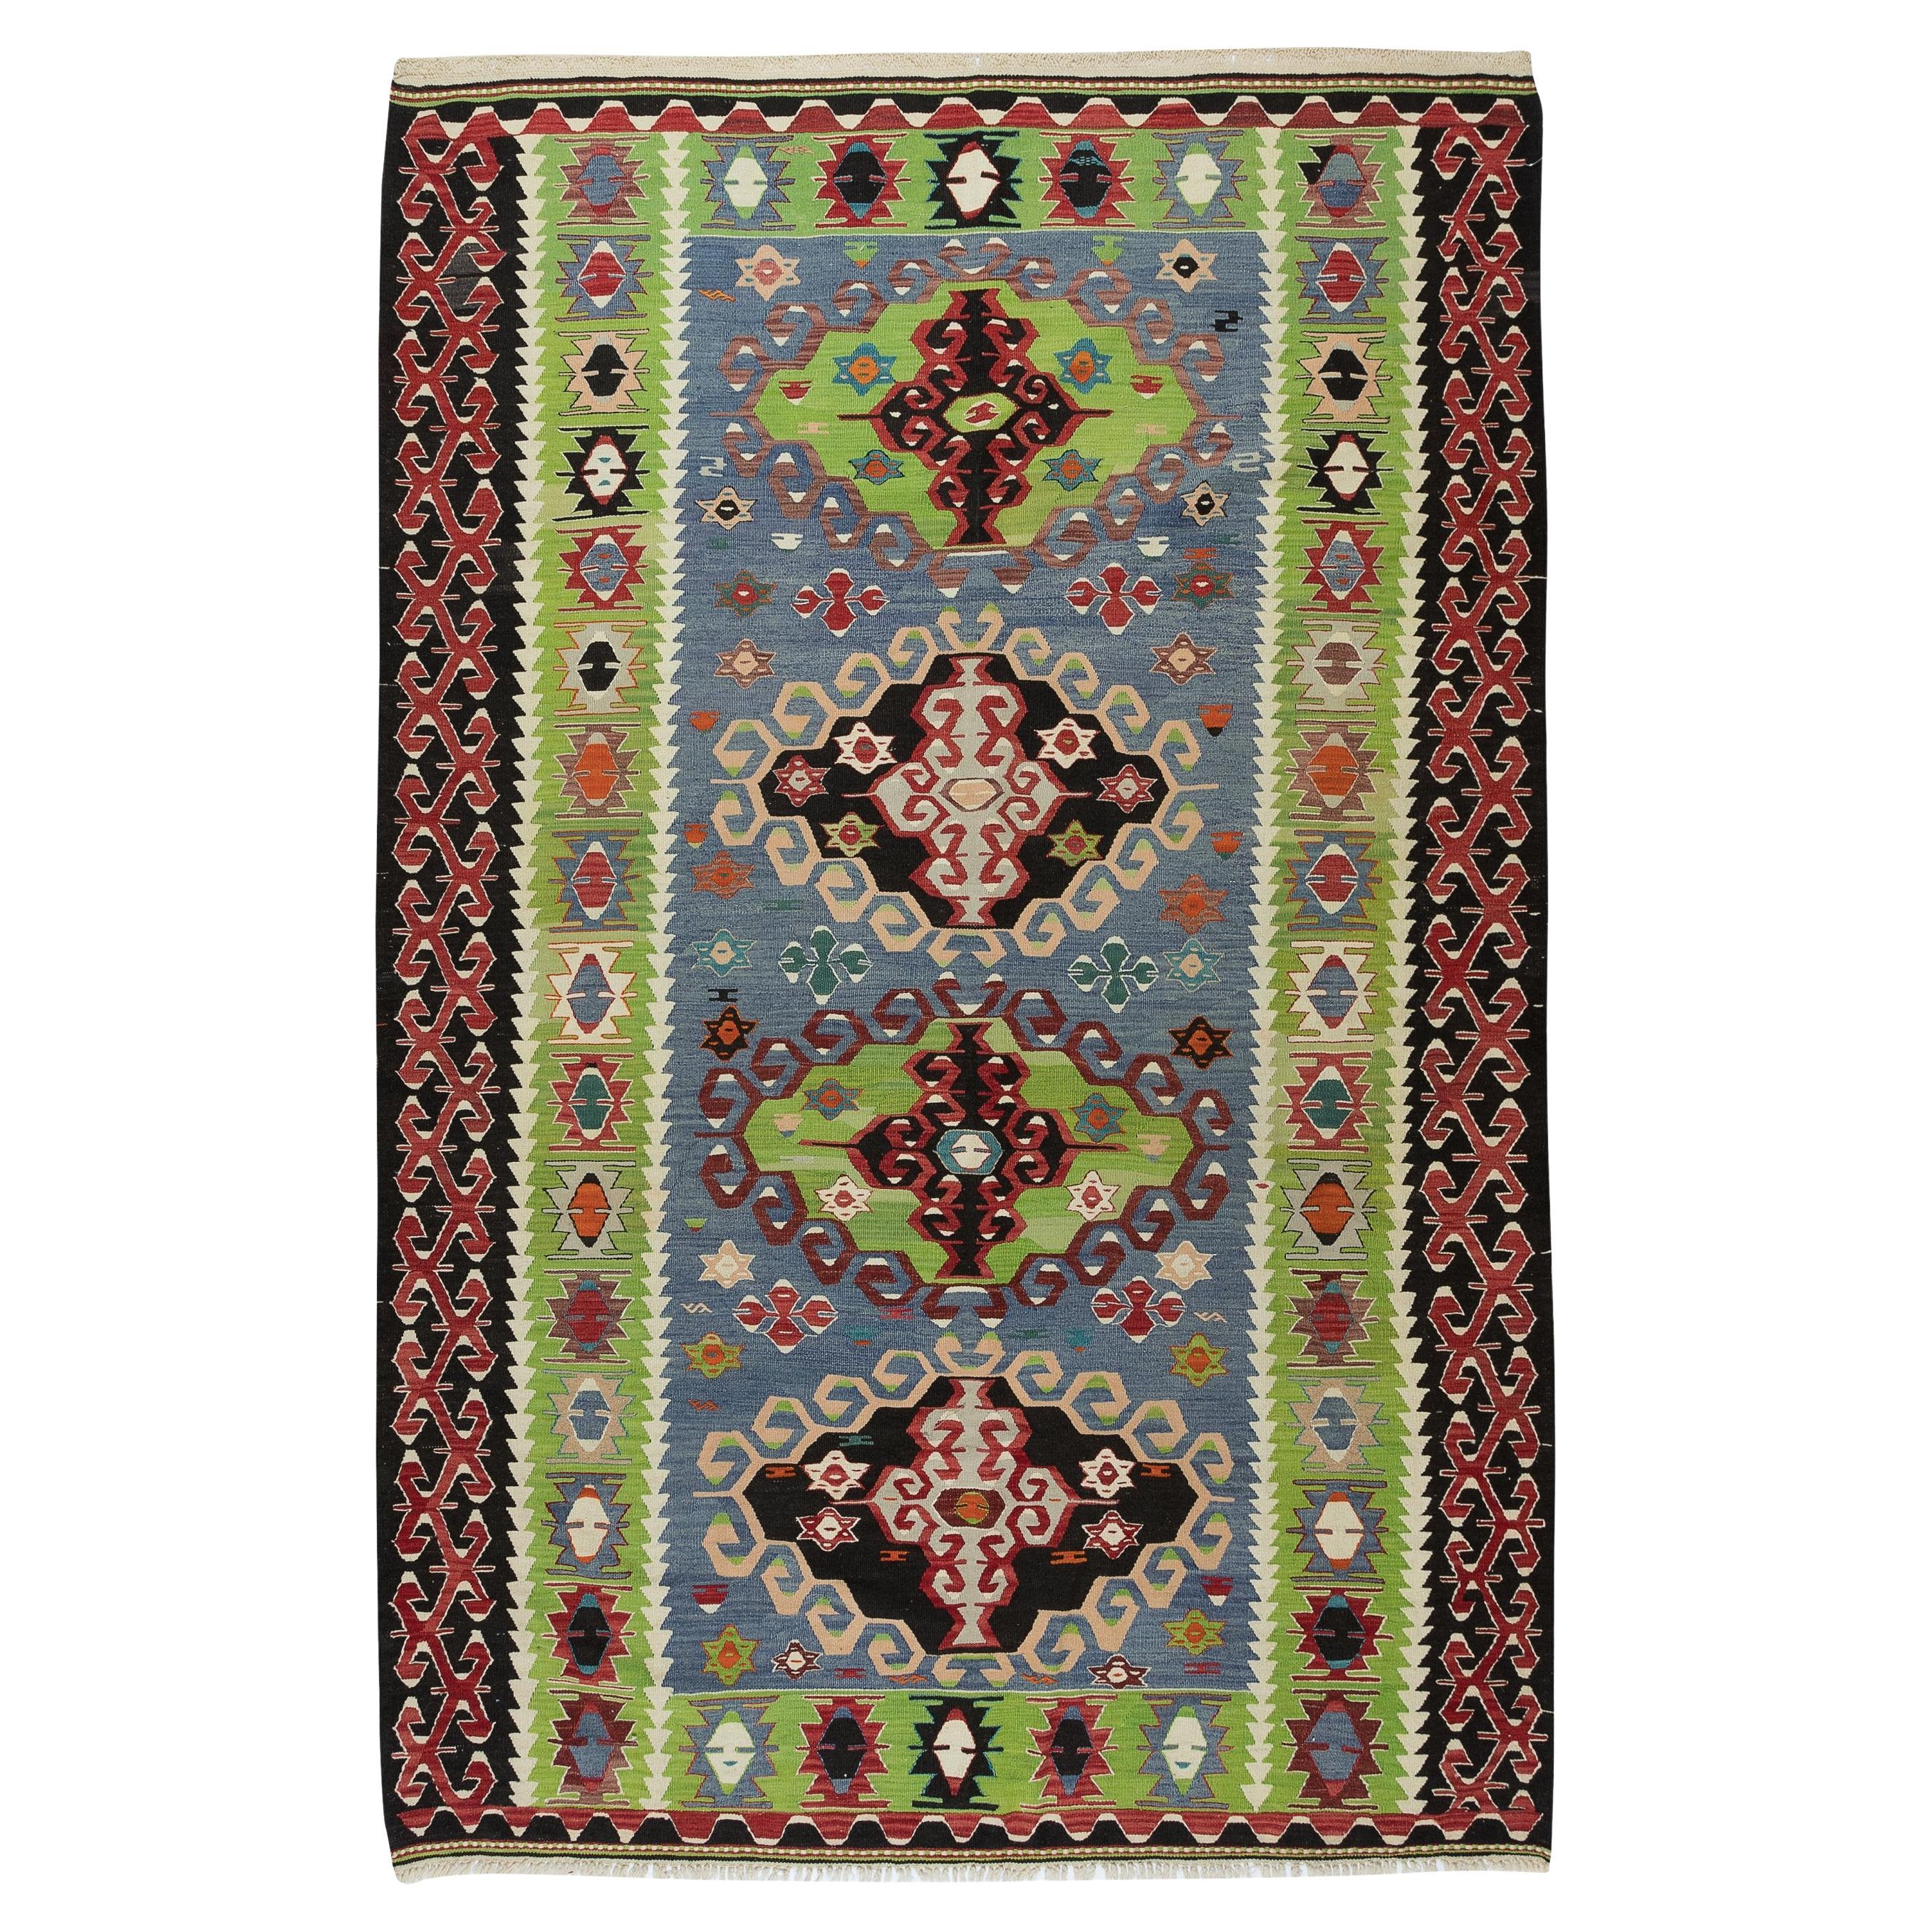 6x8.8 Ft Colorful Vintage Handmade Turkish Kilim Rug, Flat-Weave Floor Covering For Sale